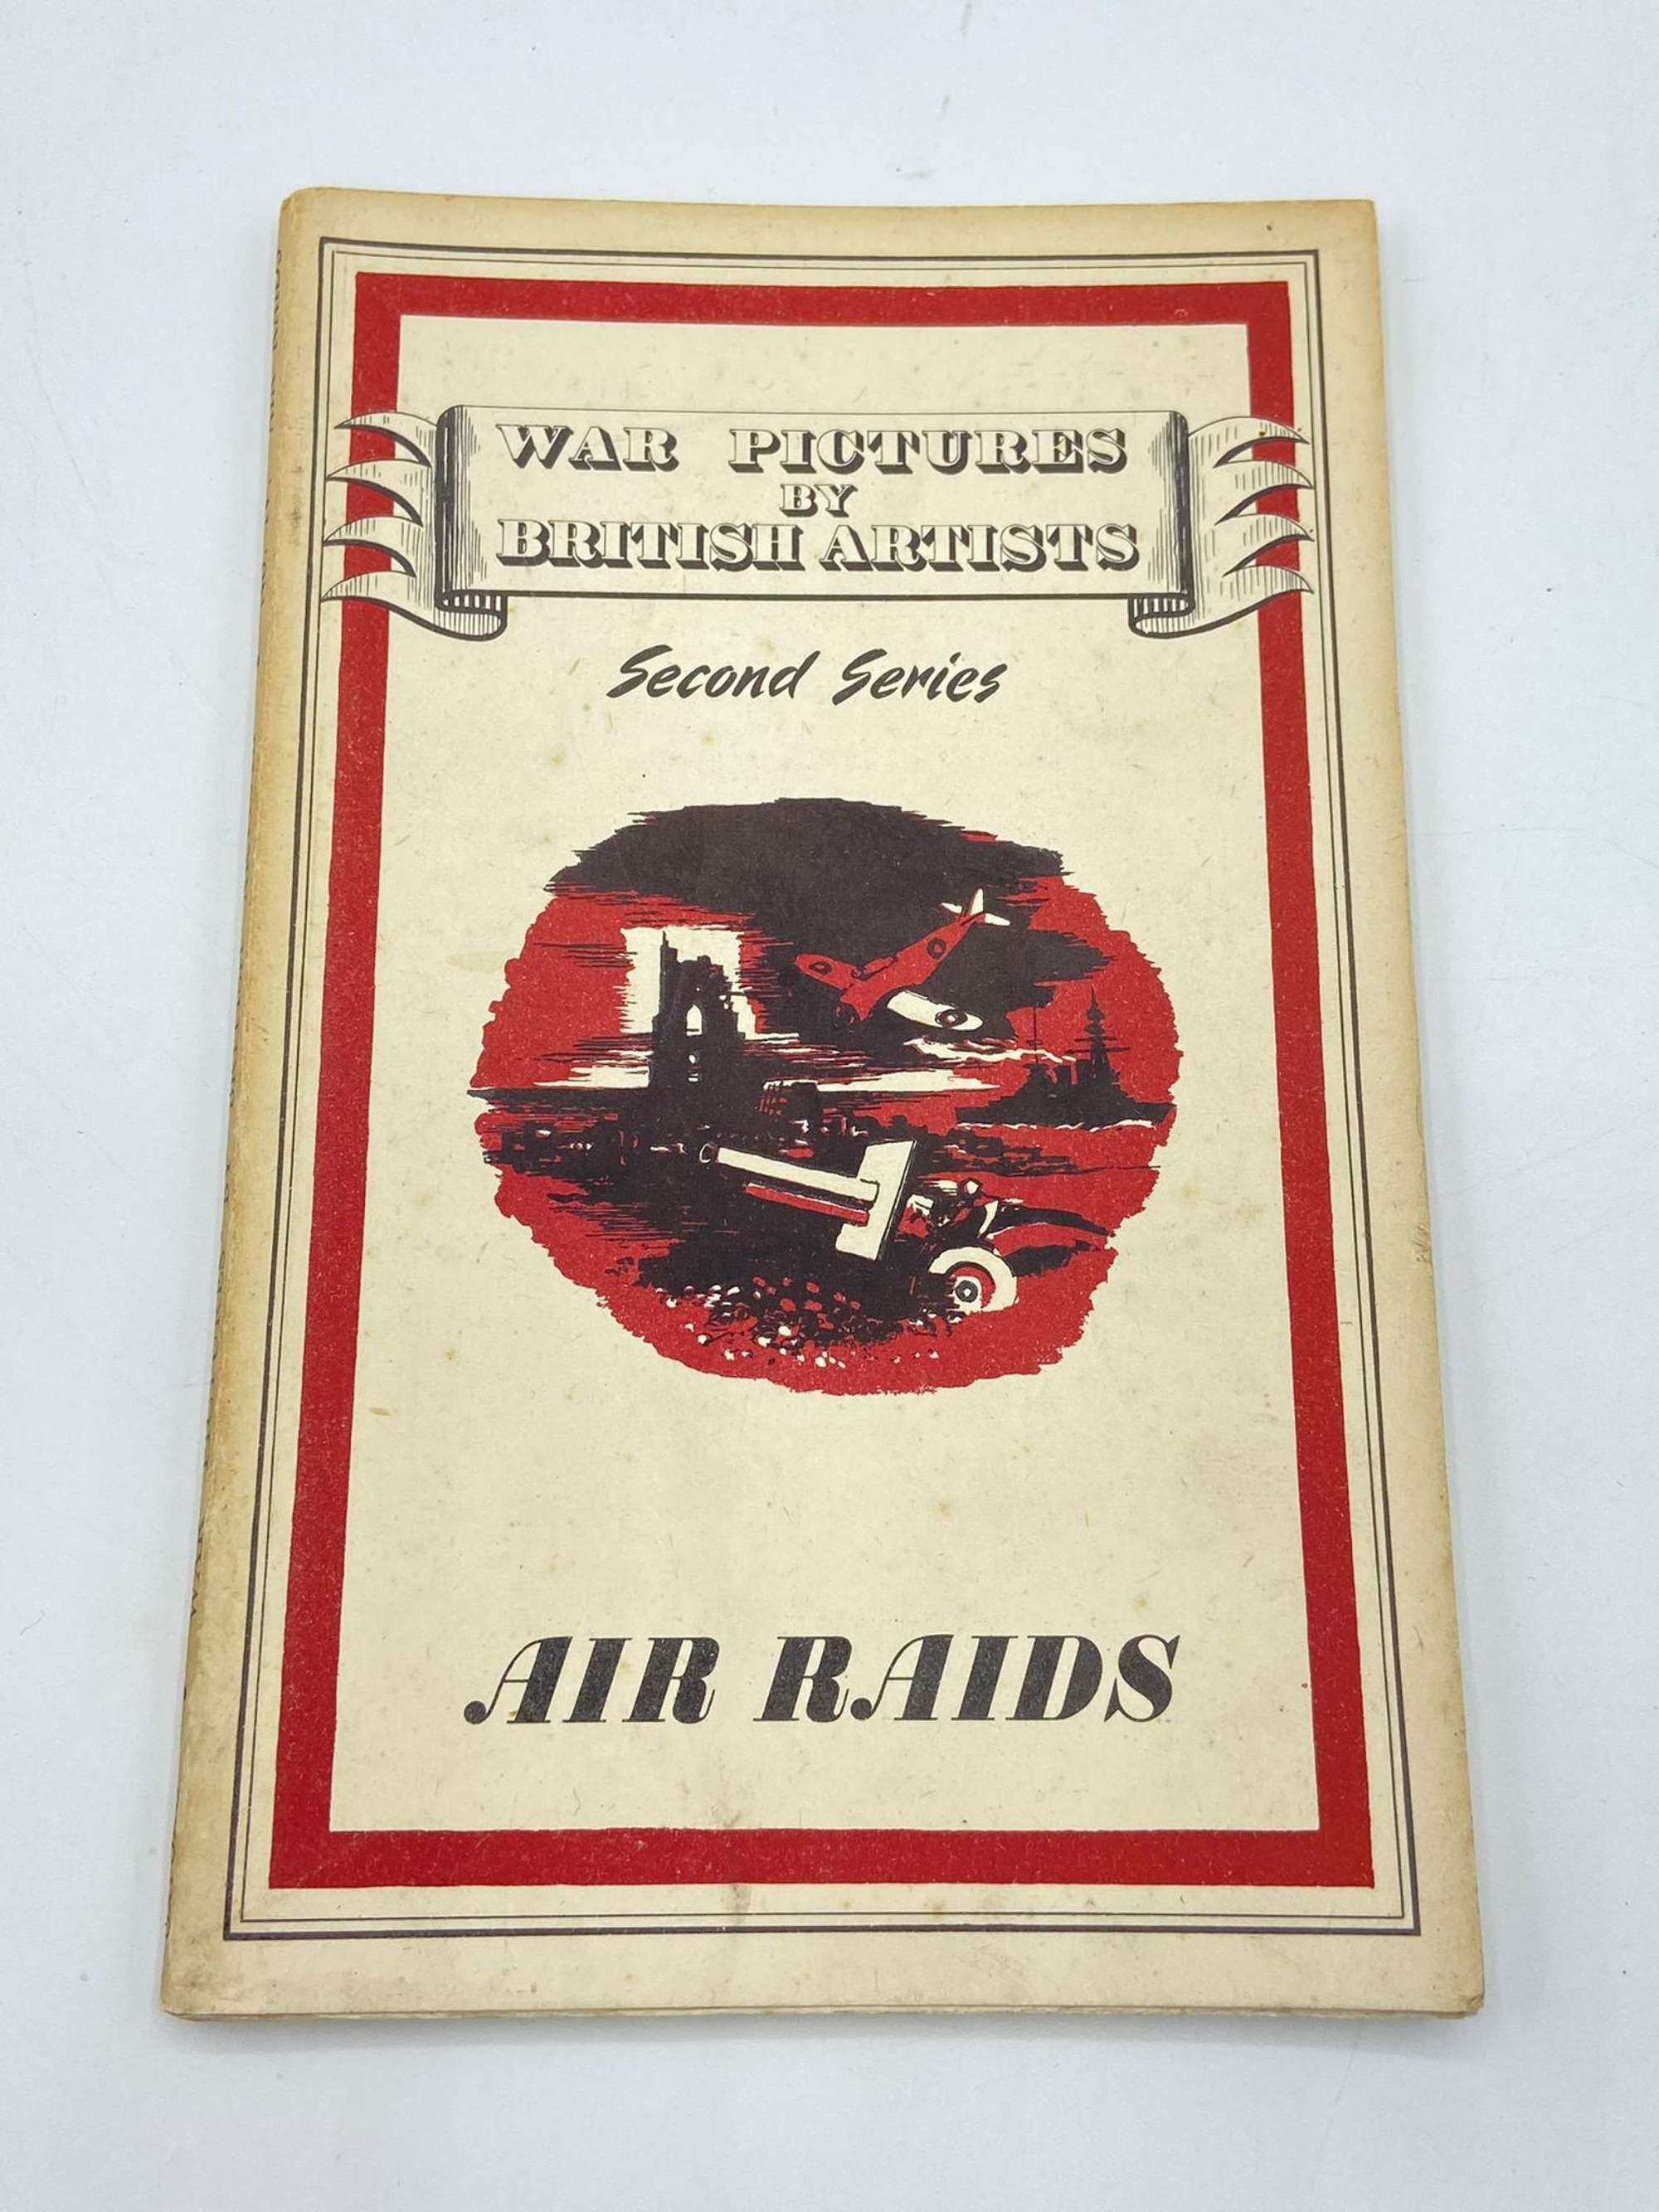 WW2 War Pictures By British Artists Air Raids Book by Stephen Spender